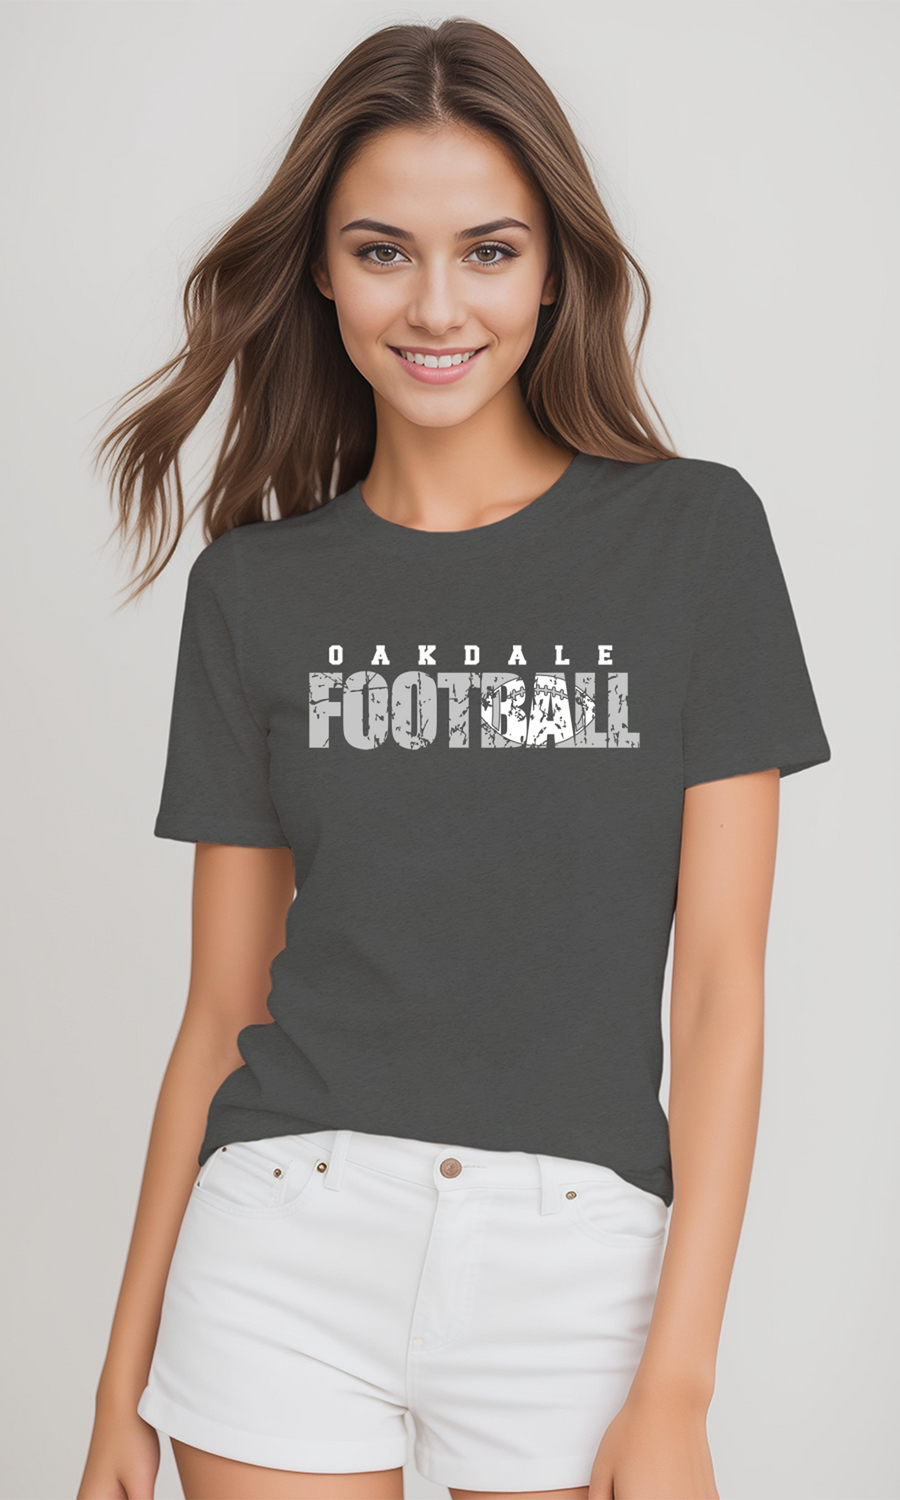 Oakdale Football- Distressed Design- Asphalt Unisex Shirt (OHS)